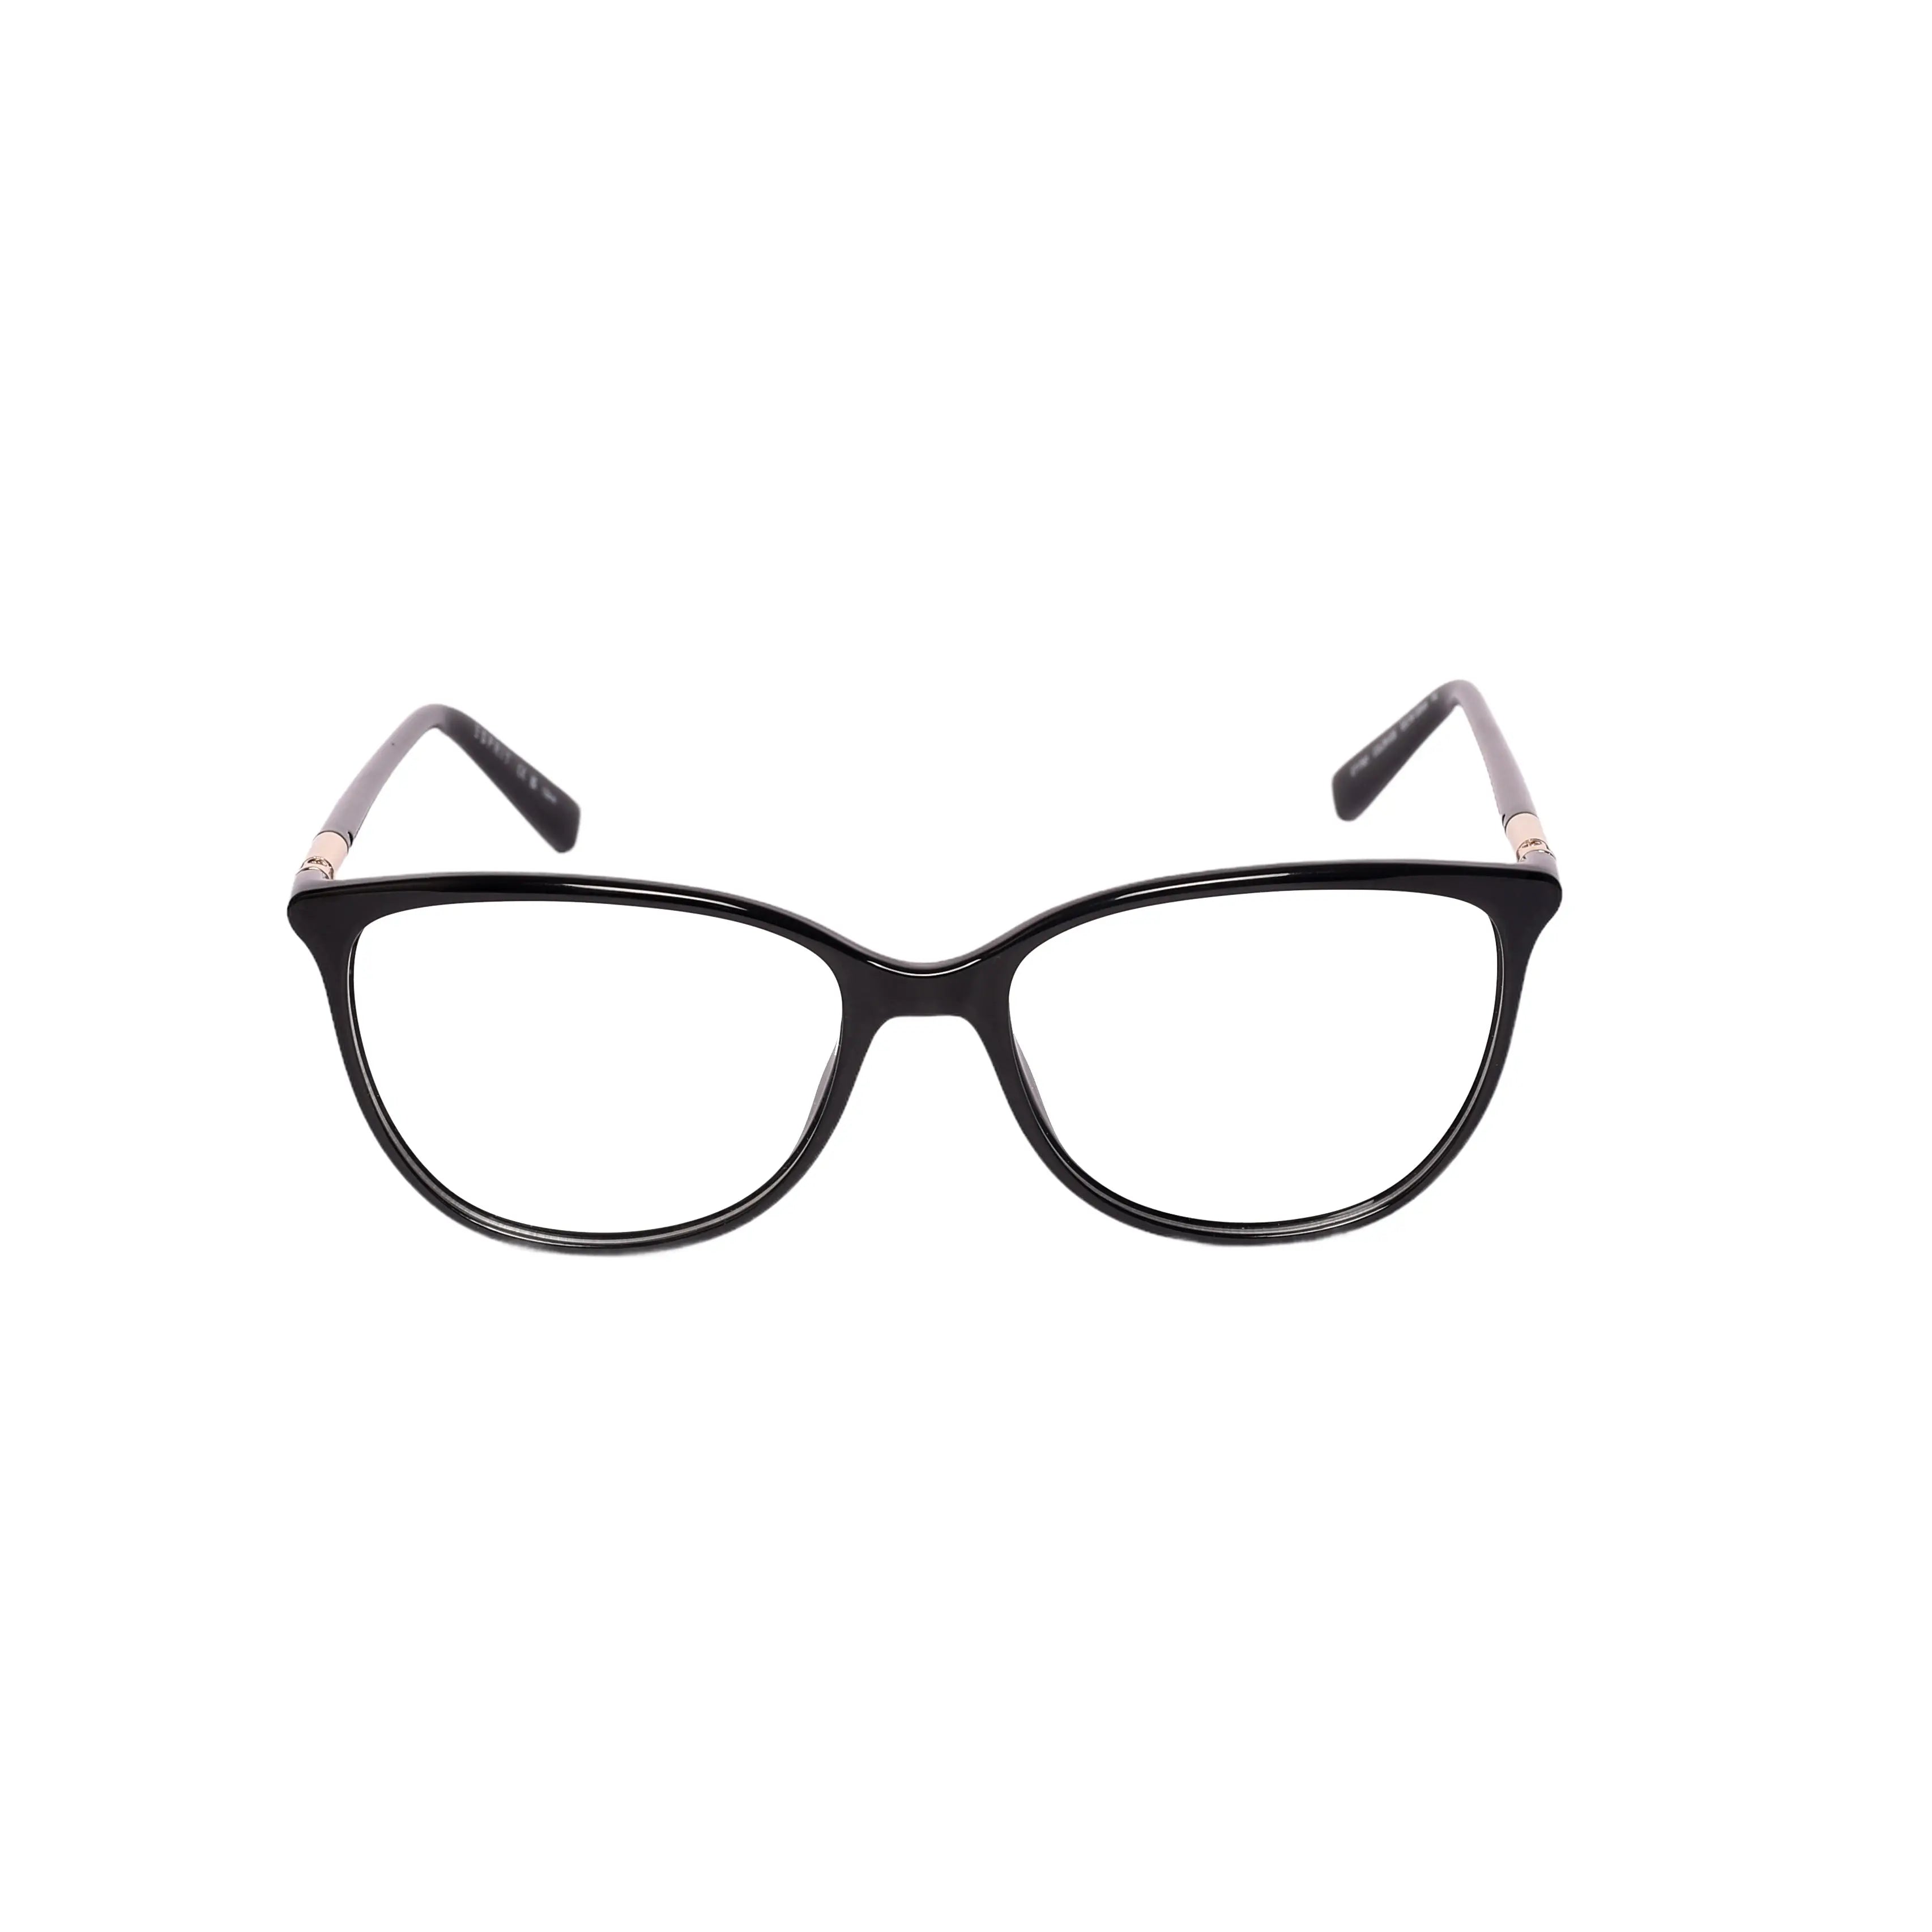 ESPRIT-ET 17561-53-538 Eyeglasses - Premium Eyeglasses from ESPRIT - Just Rs. 6150! Shop now at Laxmi Opticians